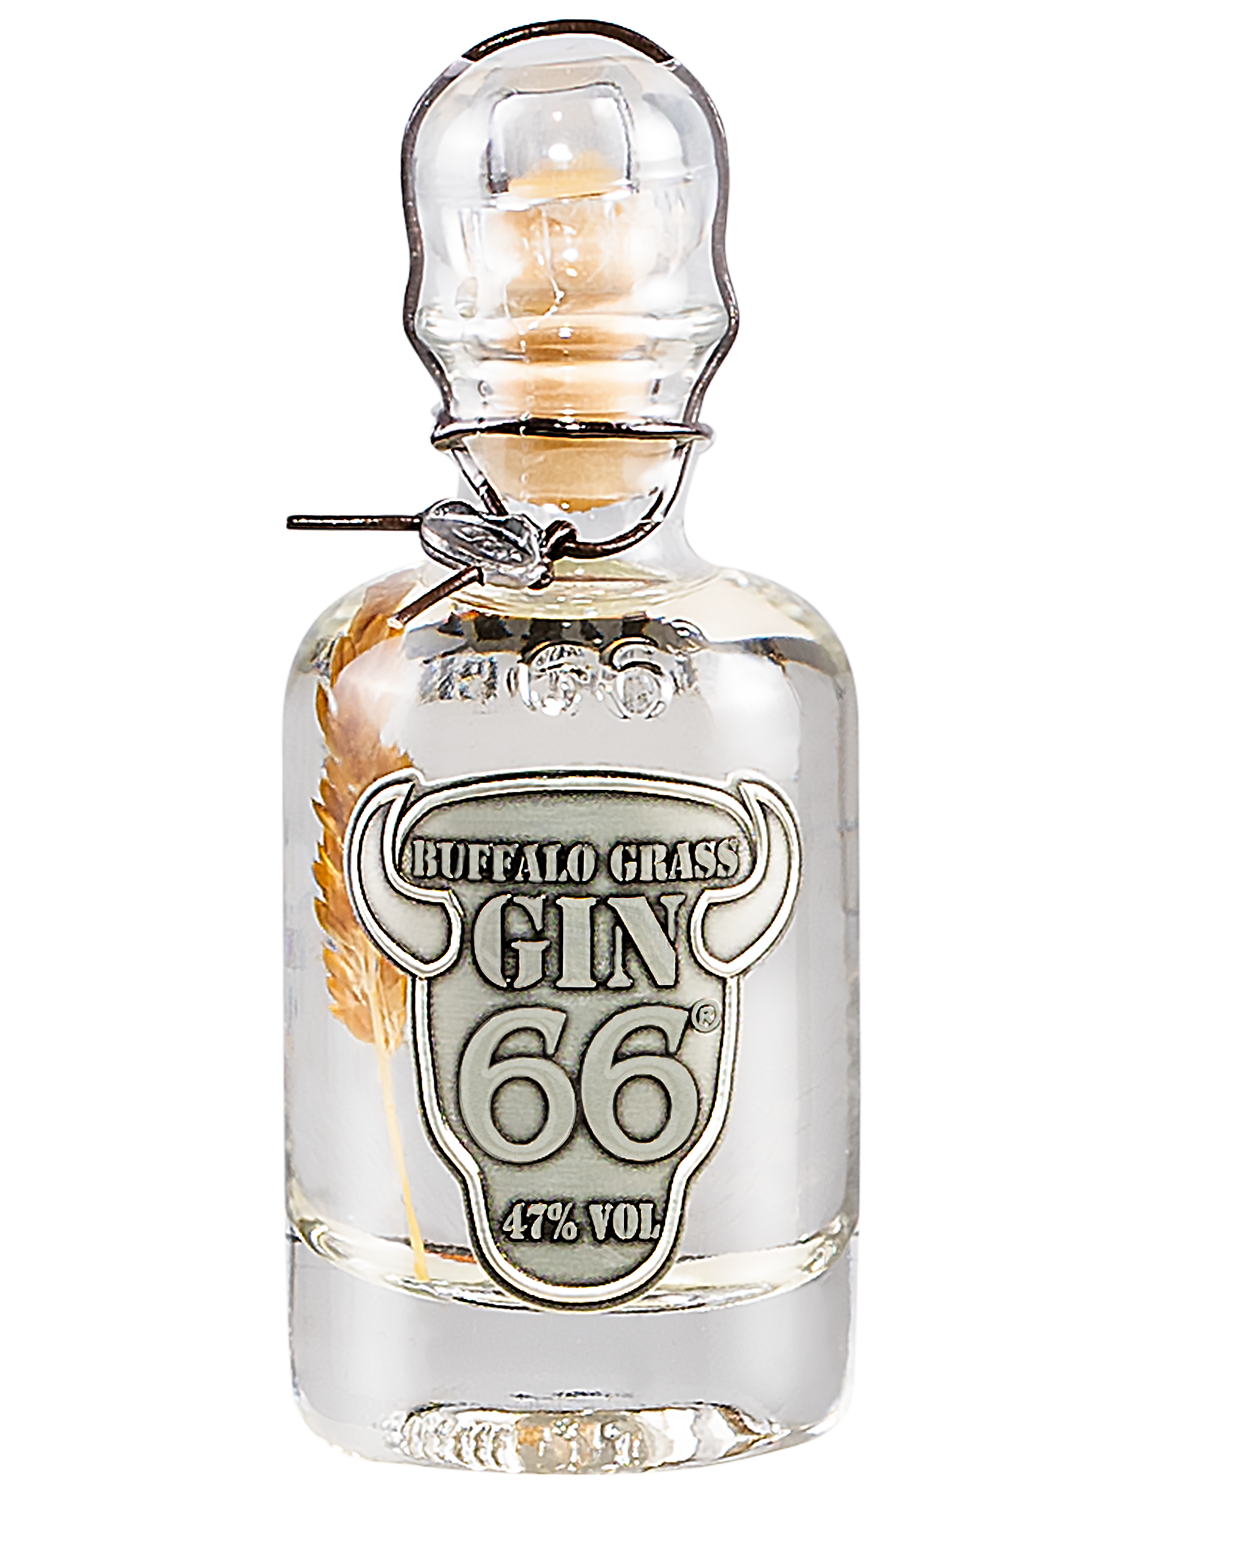 Buffalo Grass Gin 66® mini bottles - 6x40ml / 47% vol.